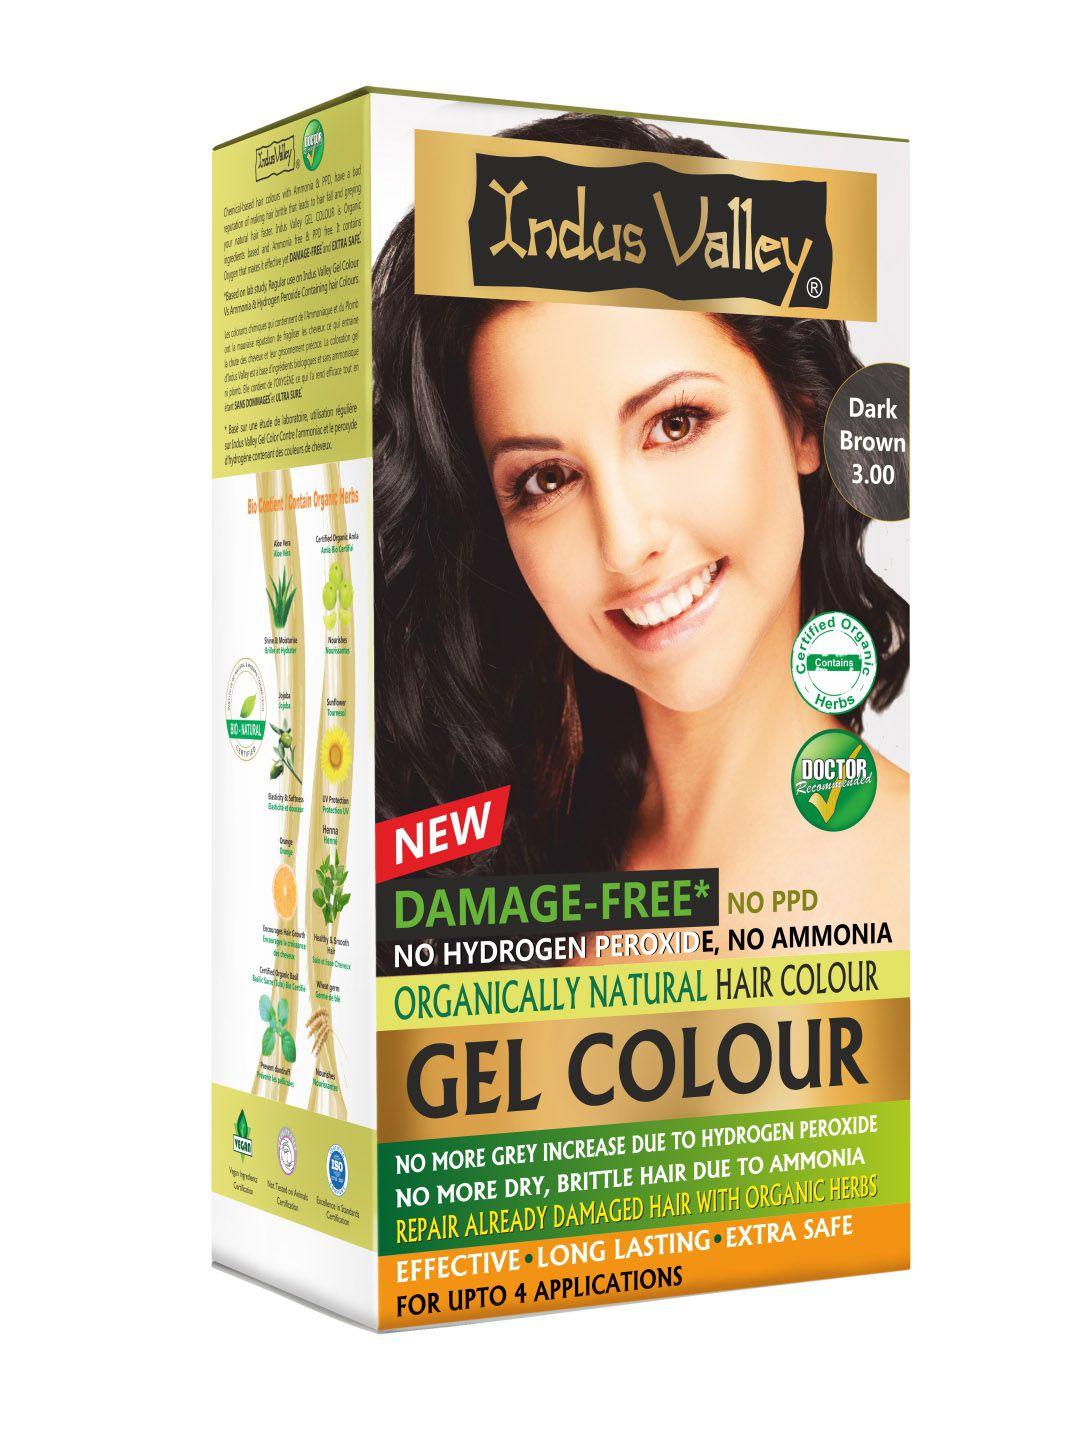 indus valley organically natural gel hair color - dark brown 3.00 220g